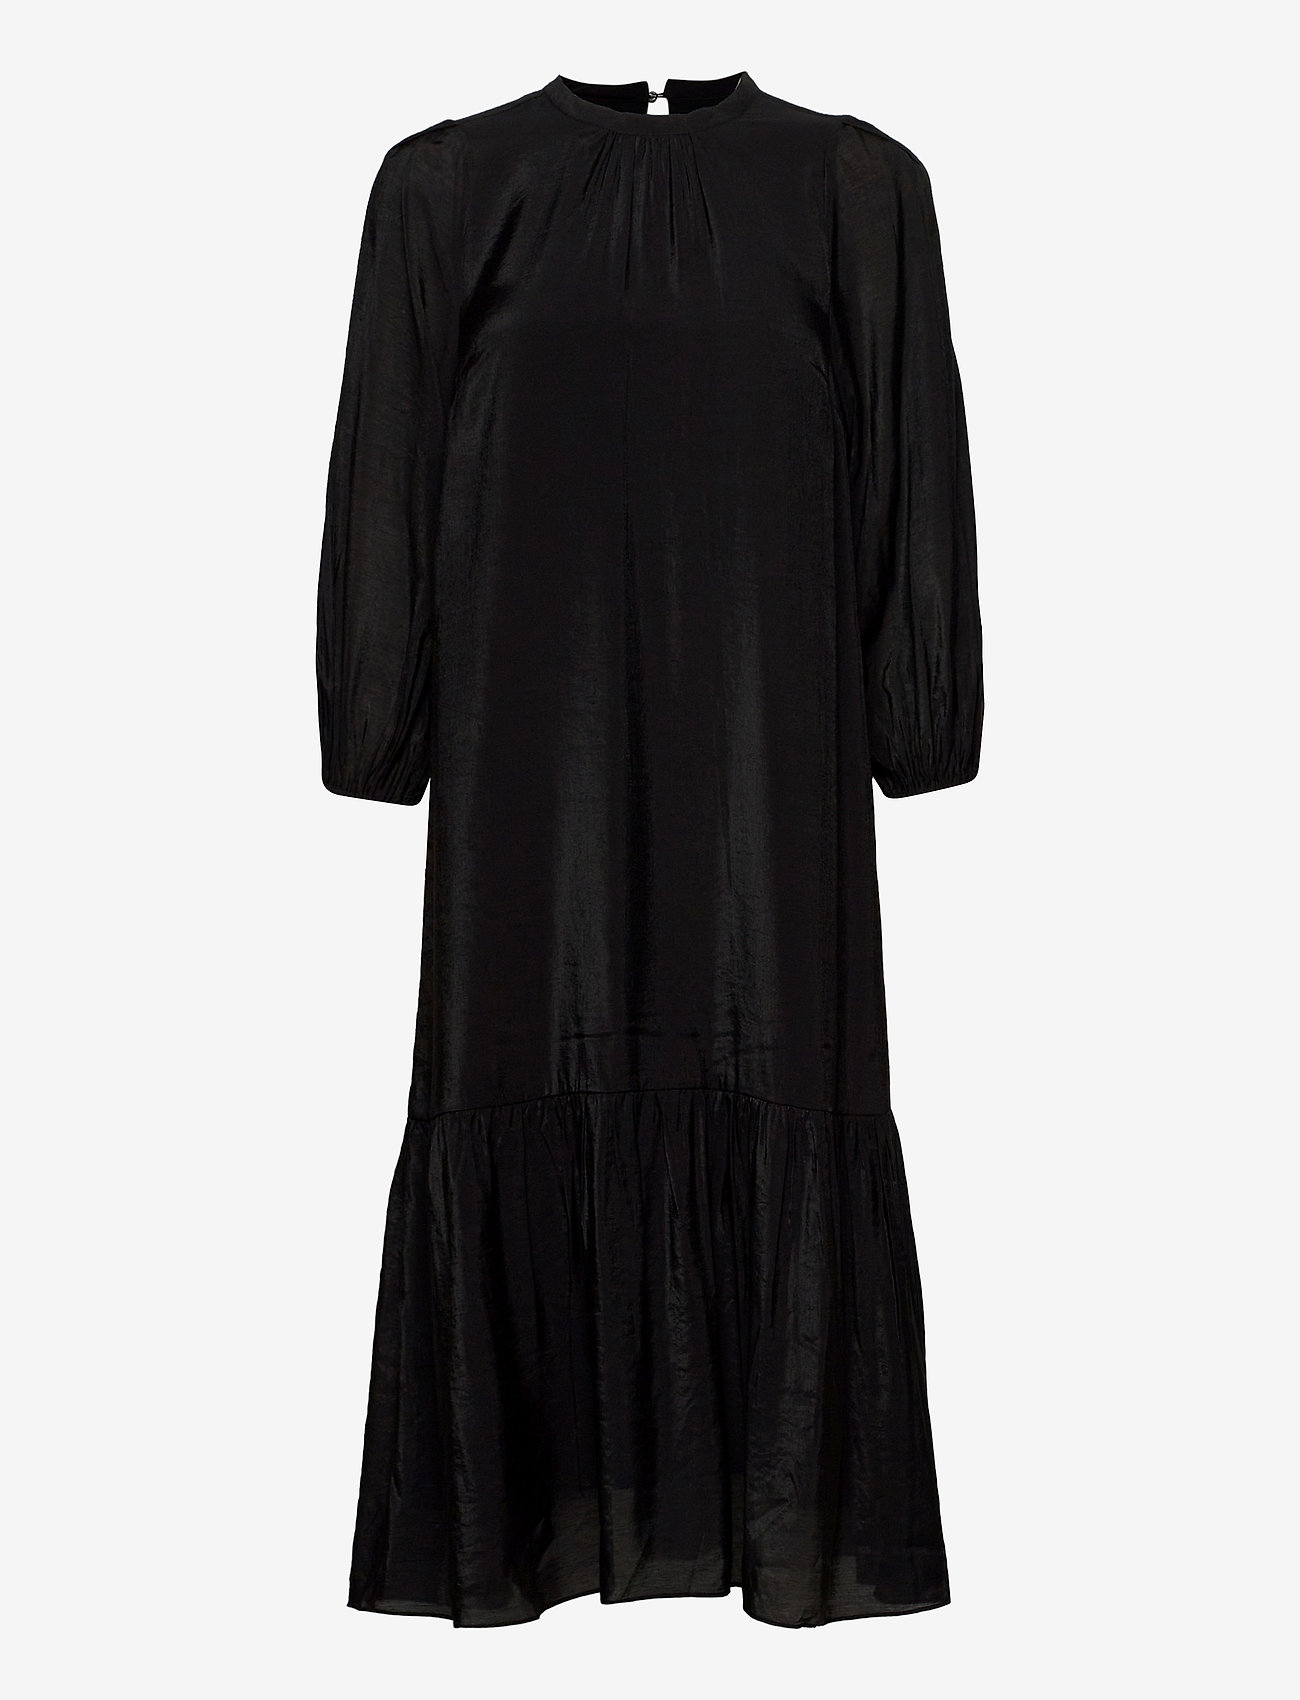 InWear - PoppyIW Dress - midikleider - black - 0